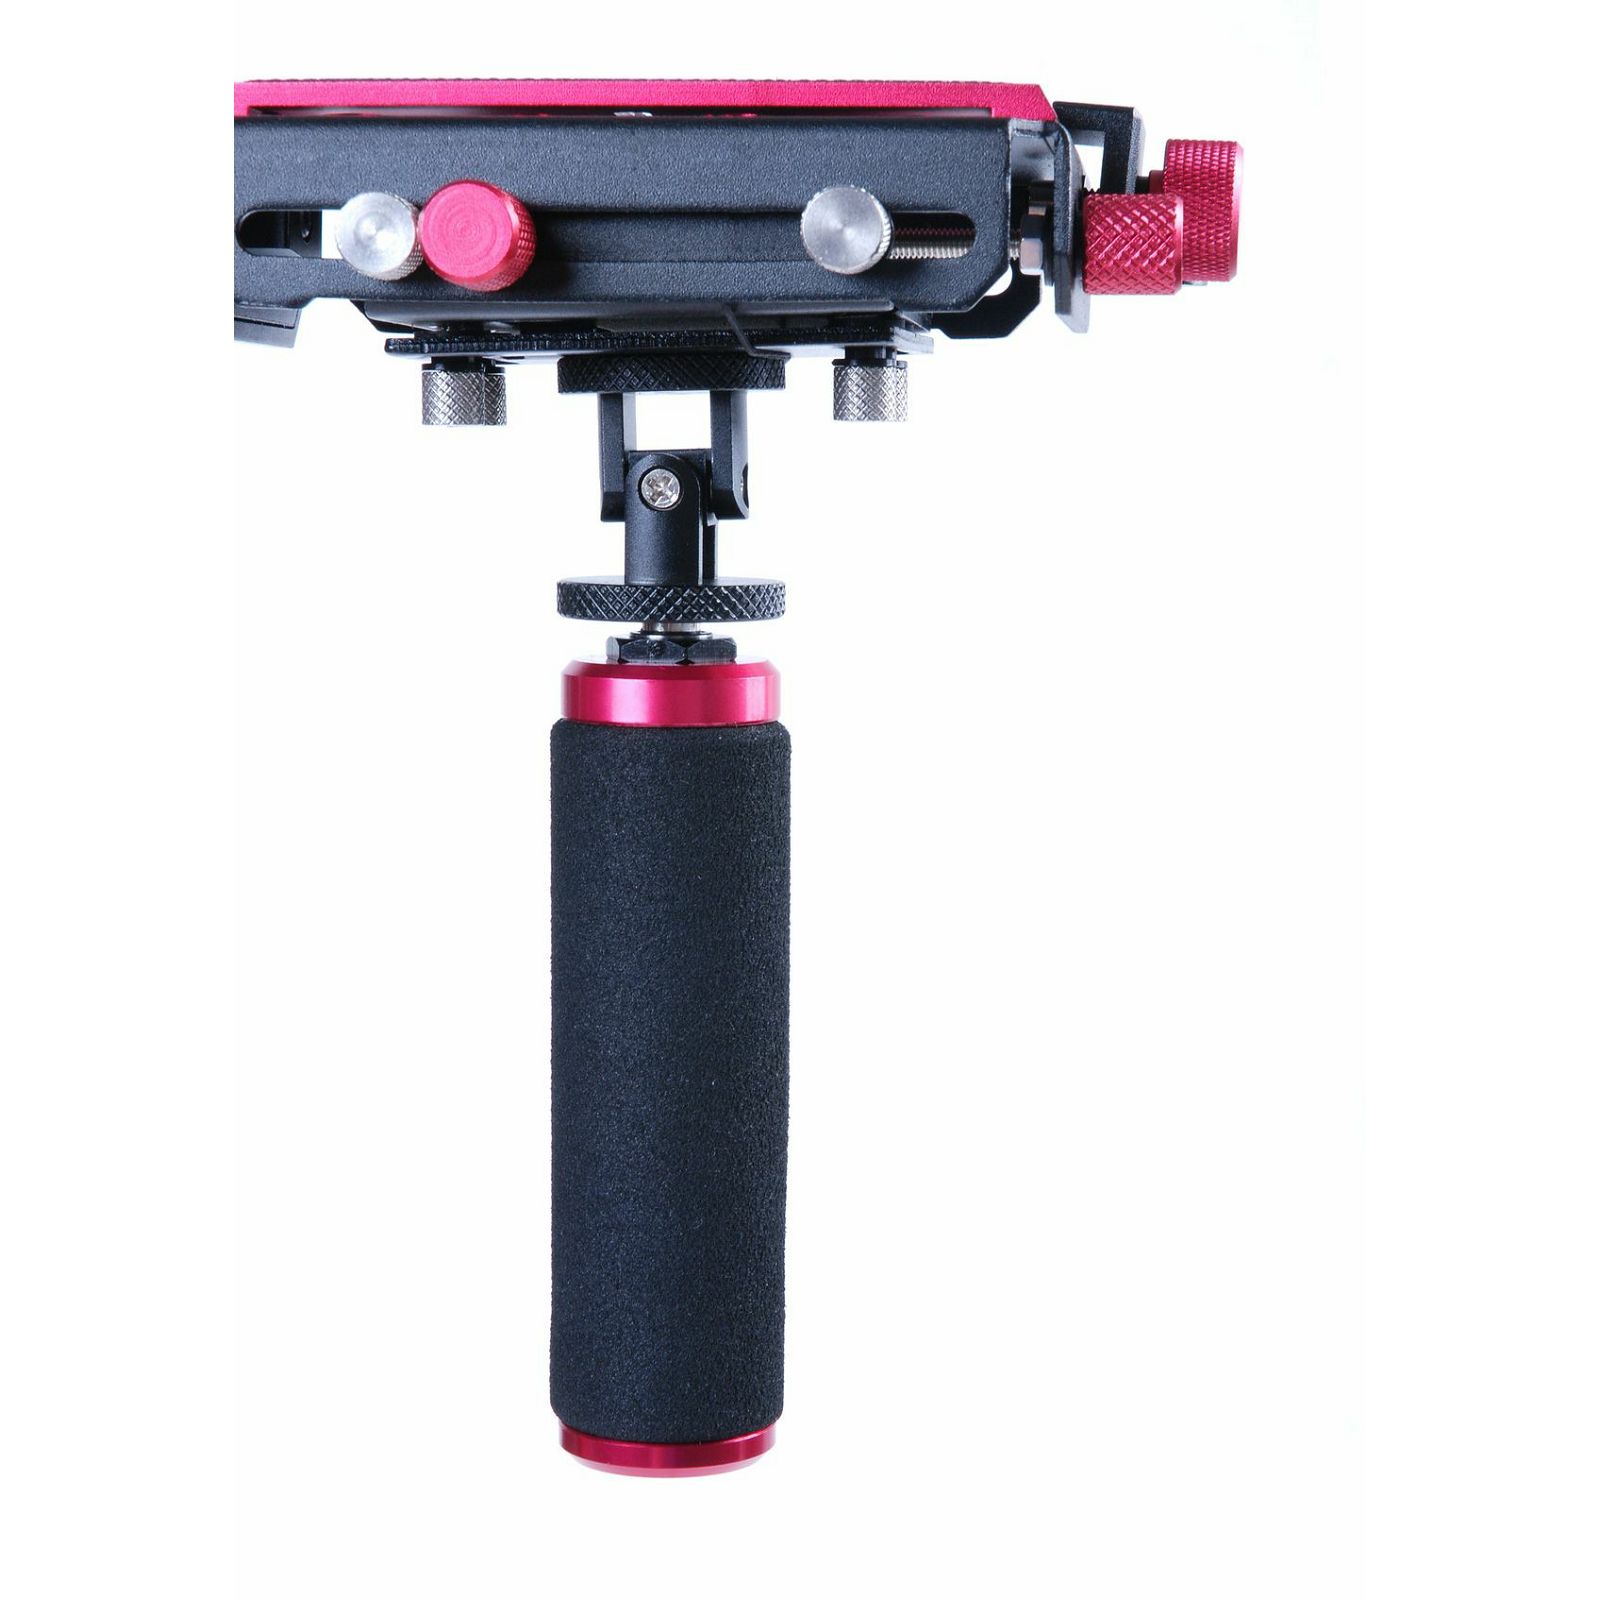 Sevenoak Camera Stabilizer SK-W01 SteadyCam stabilizator DSLR fotoaparata i kamere za video snimanje s utegom